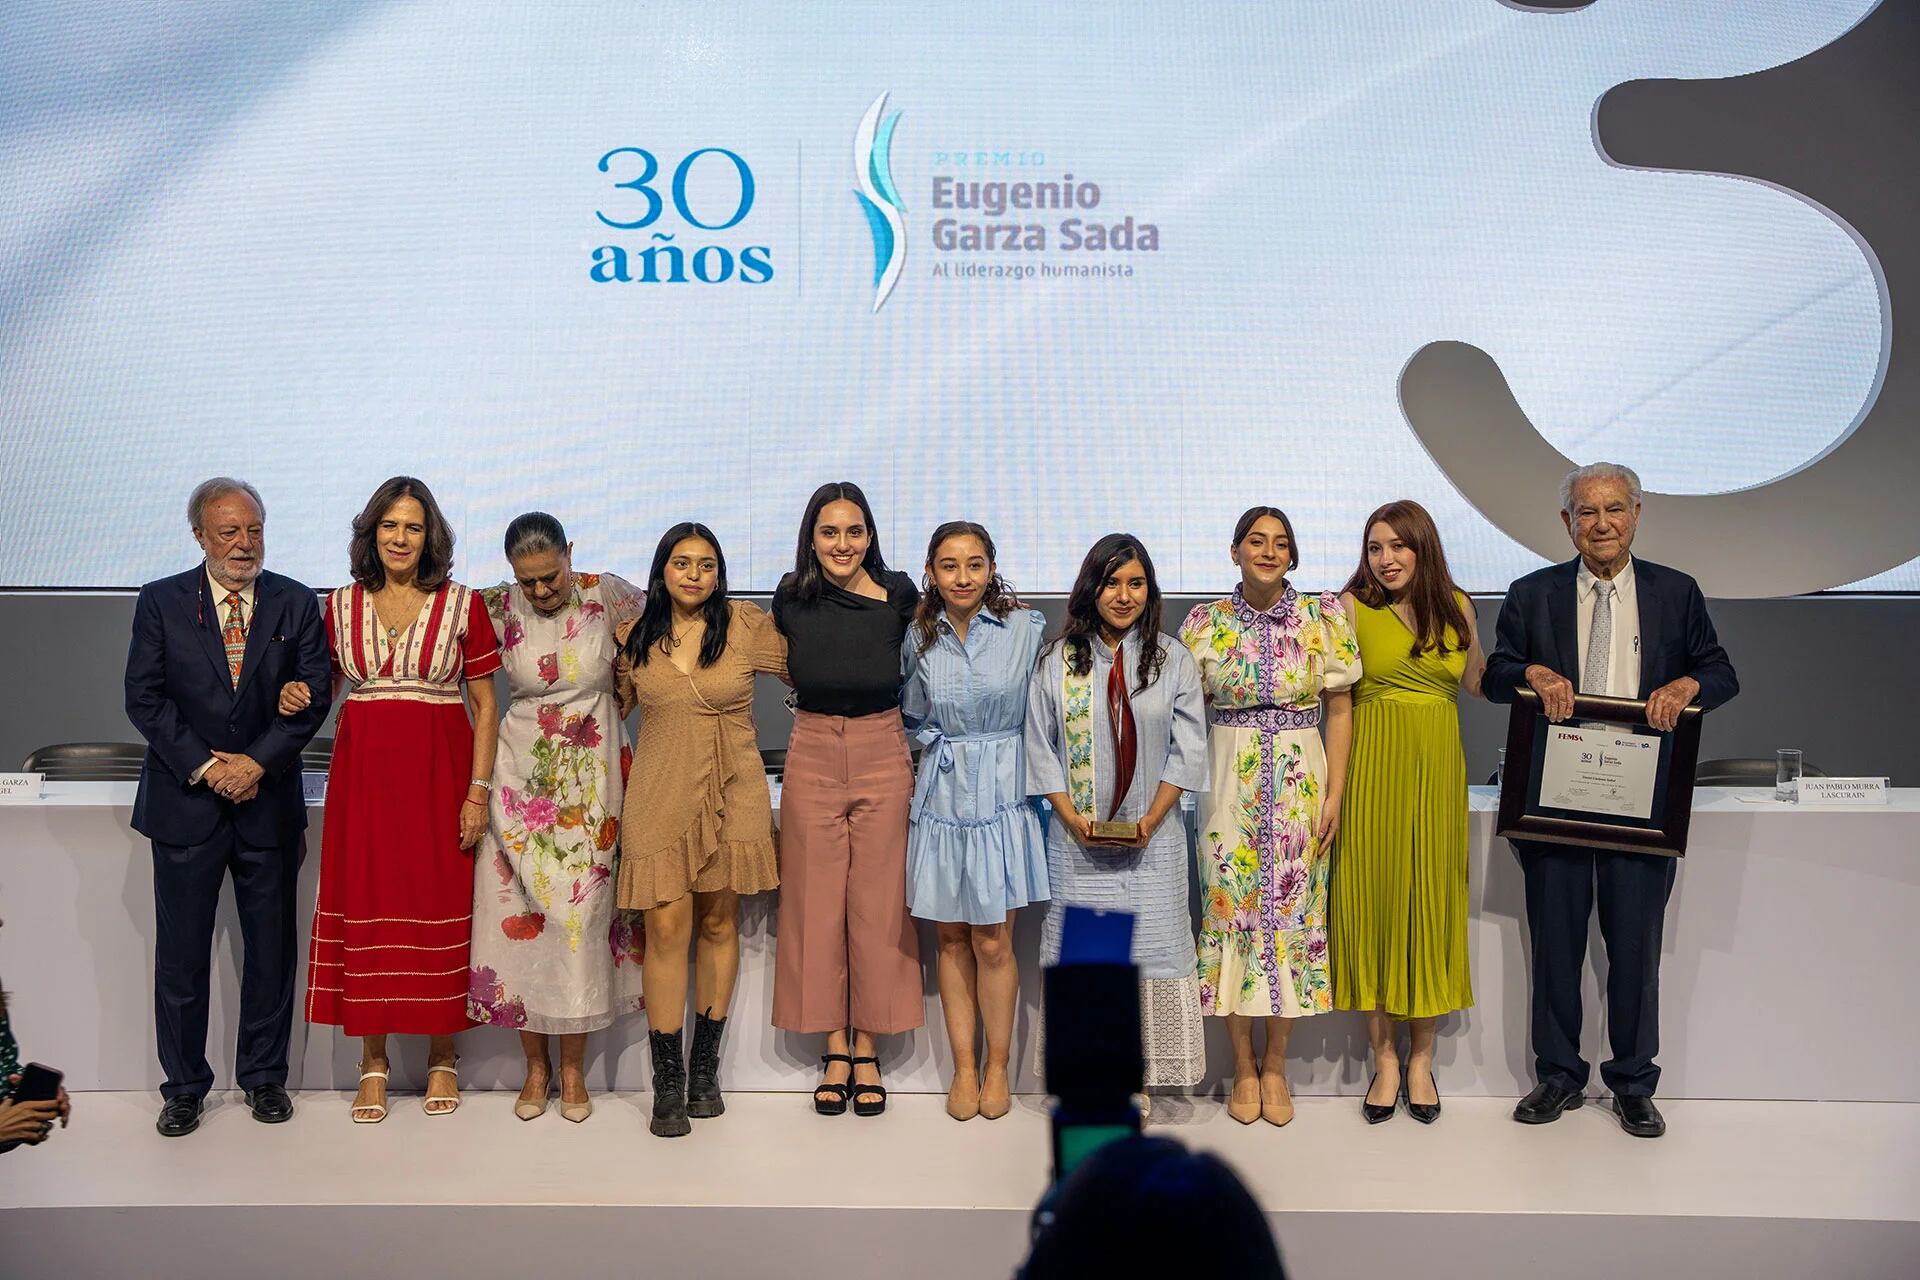 Ticmas - Eugenio Garza Sada Award